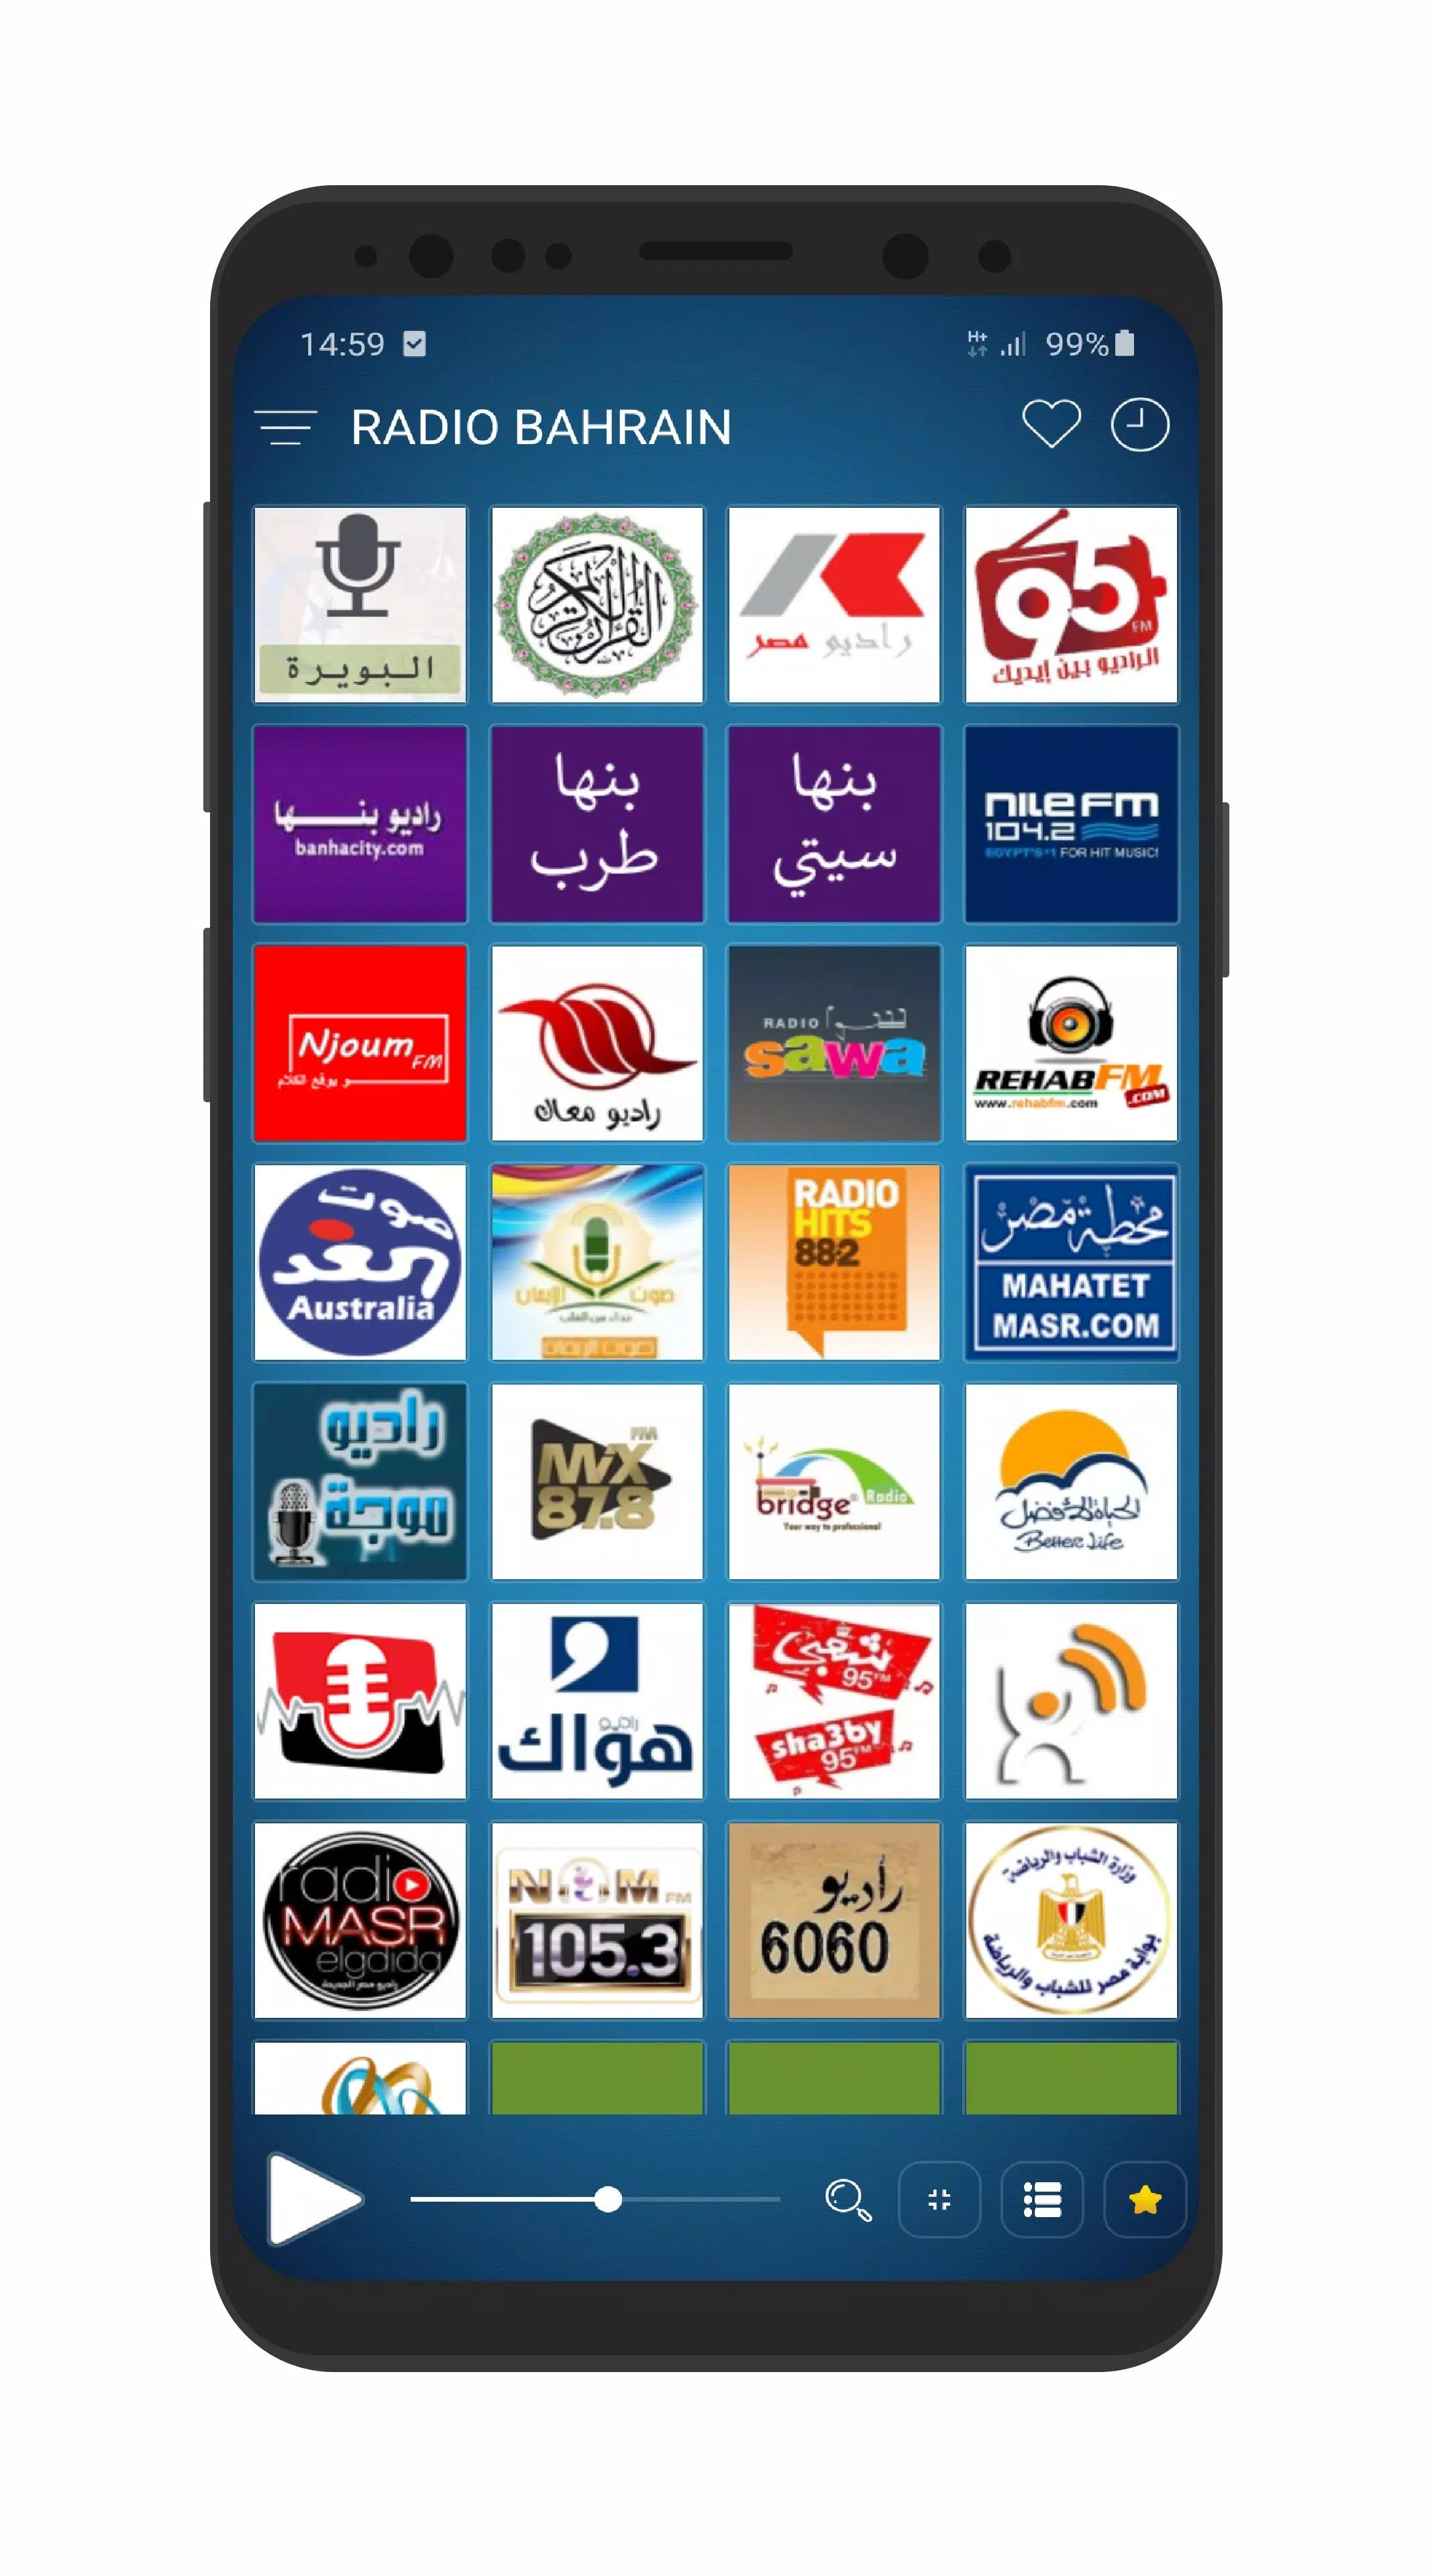 Bahrain Radio Stations: Radio Bahrain for Android - APK Download